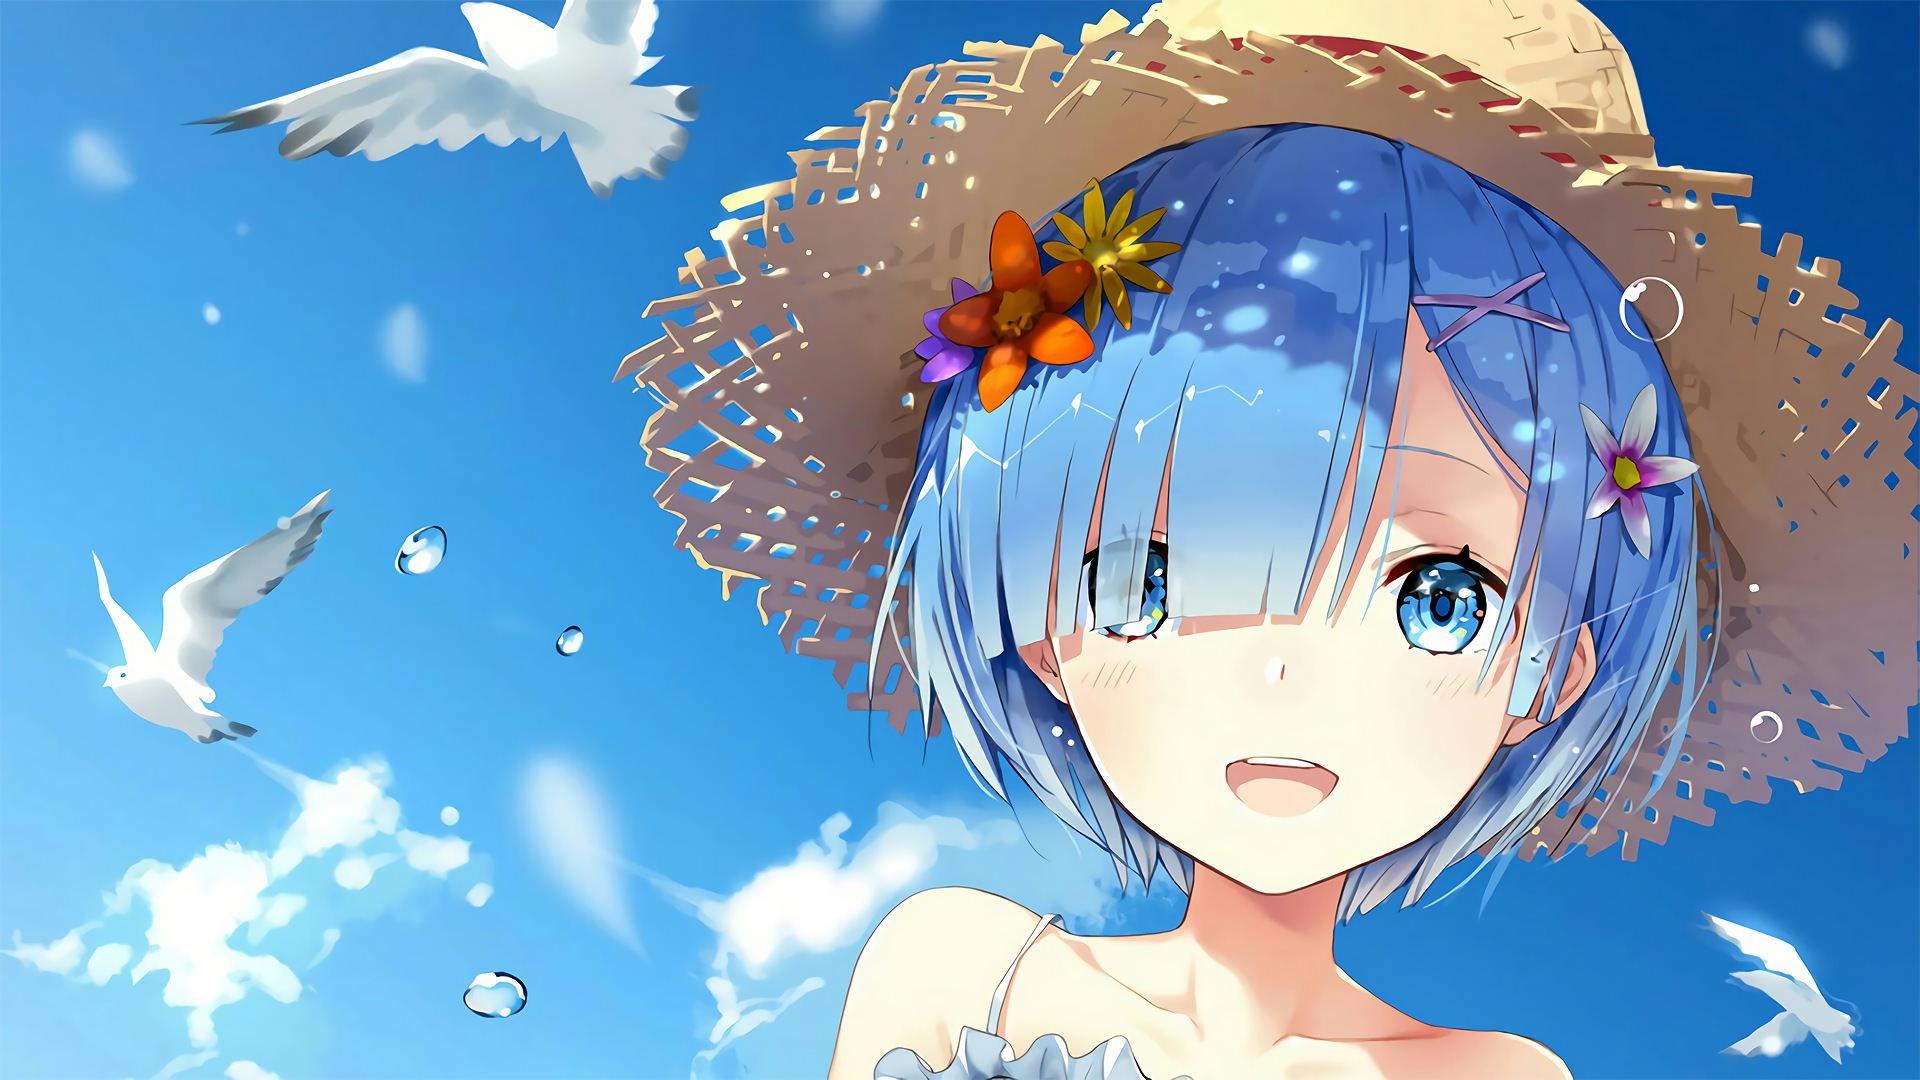 Summer Anime Girl Wallpapers - Top Free Summer Anime Girl ...